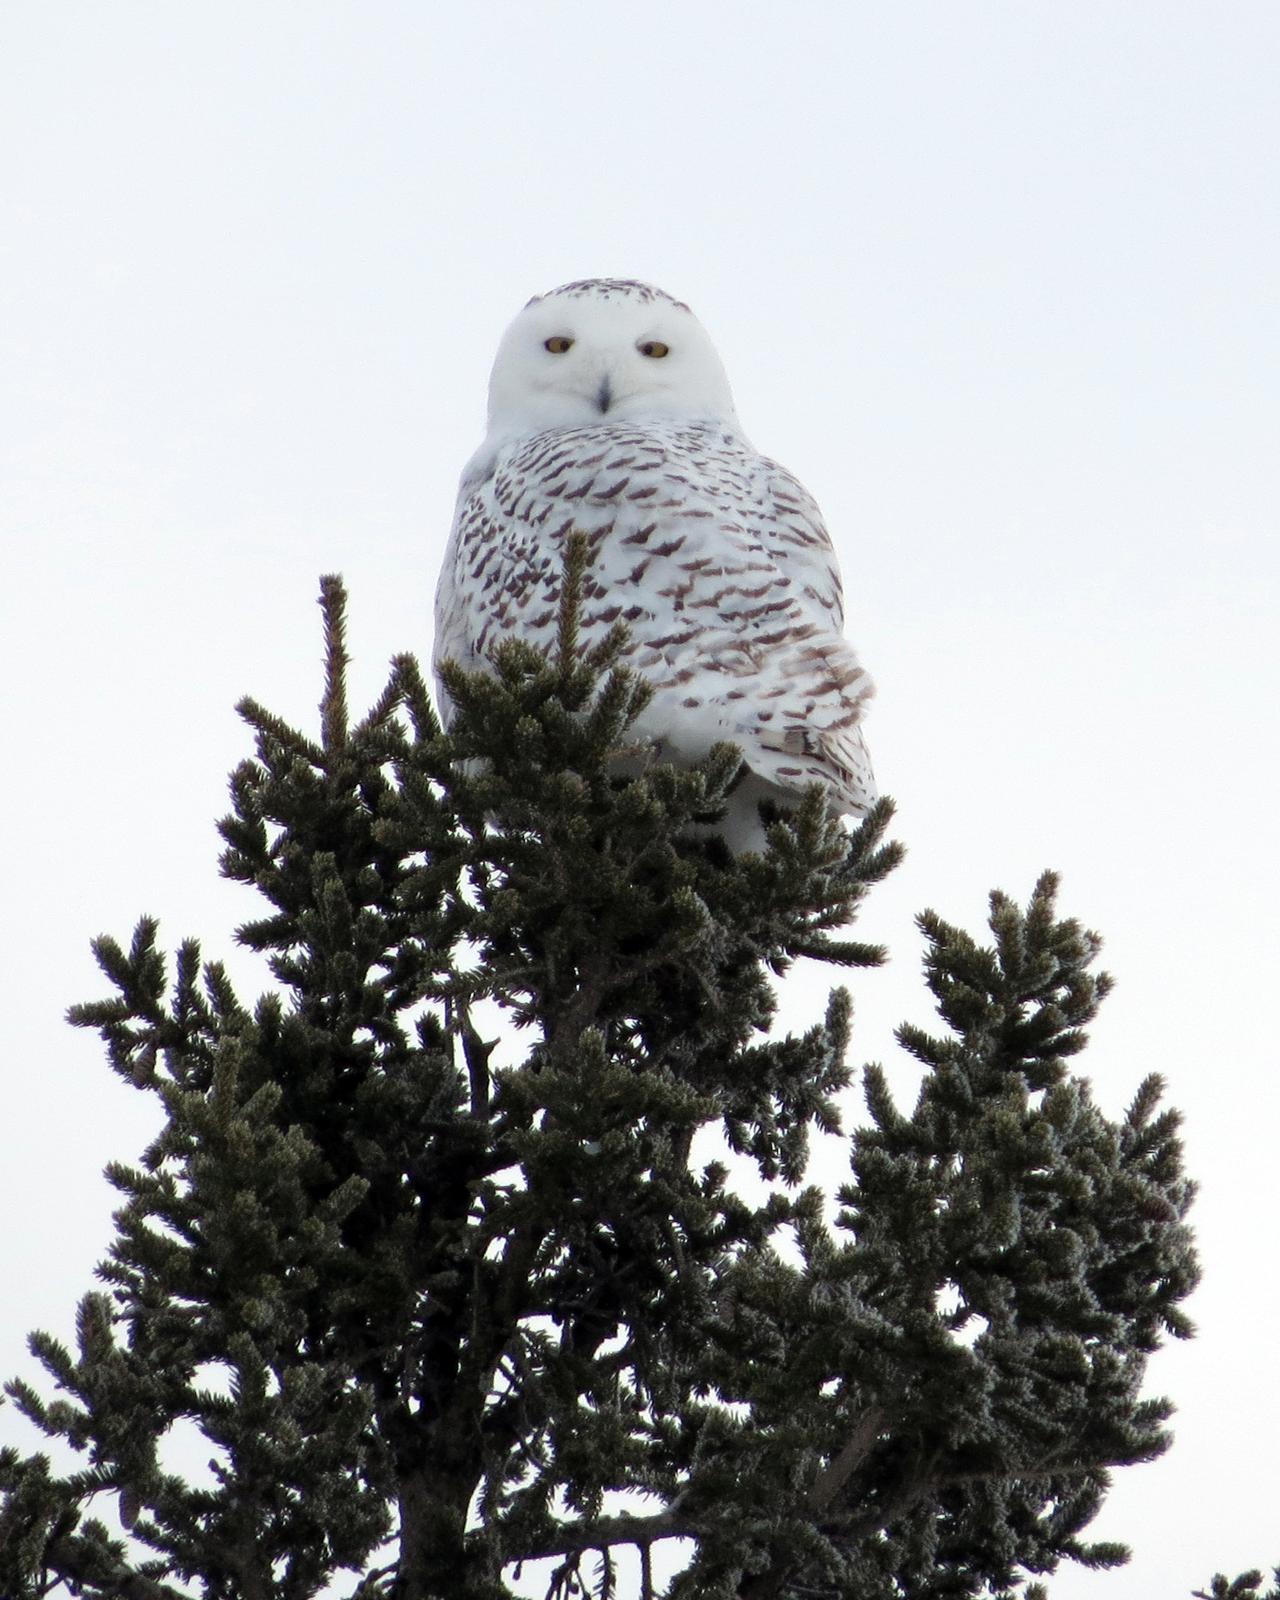 Snowy Owl Photo by Anna E. Wittmer